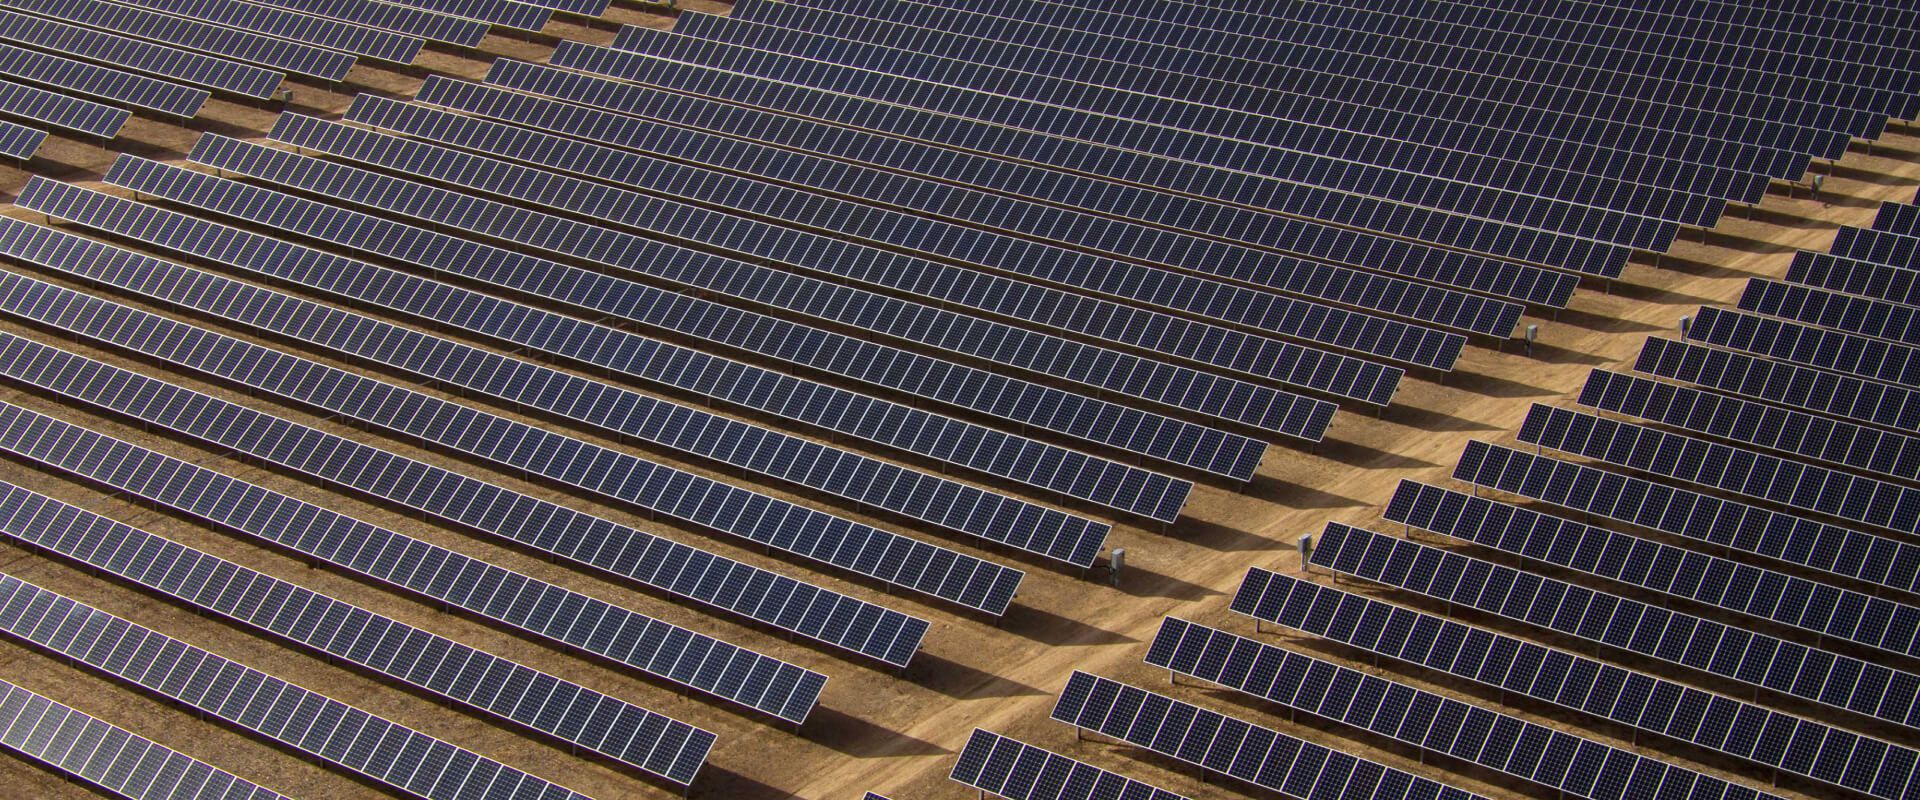 A large array of solar panels in a barren desert ground.